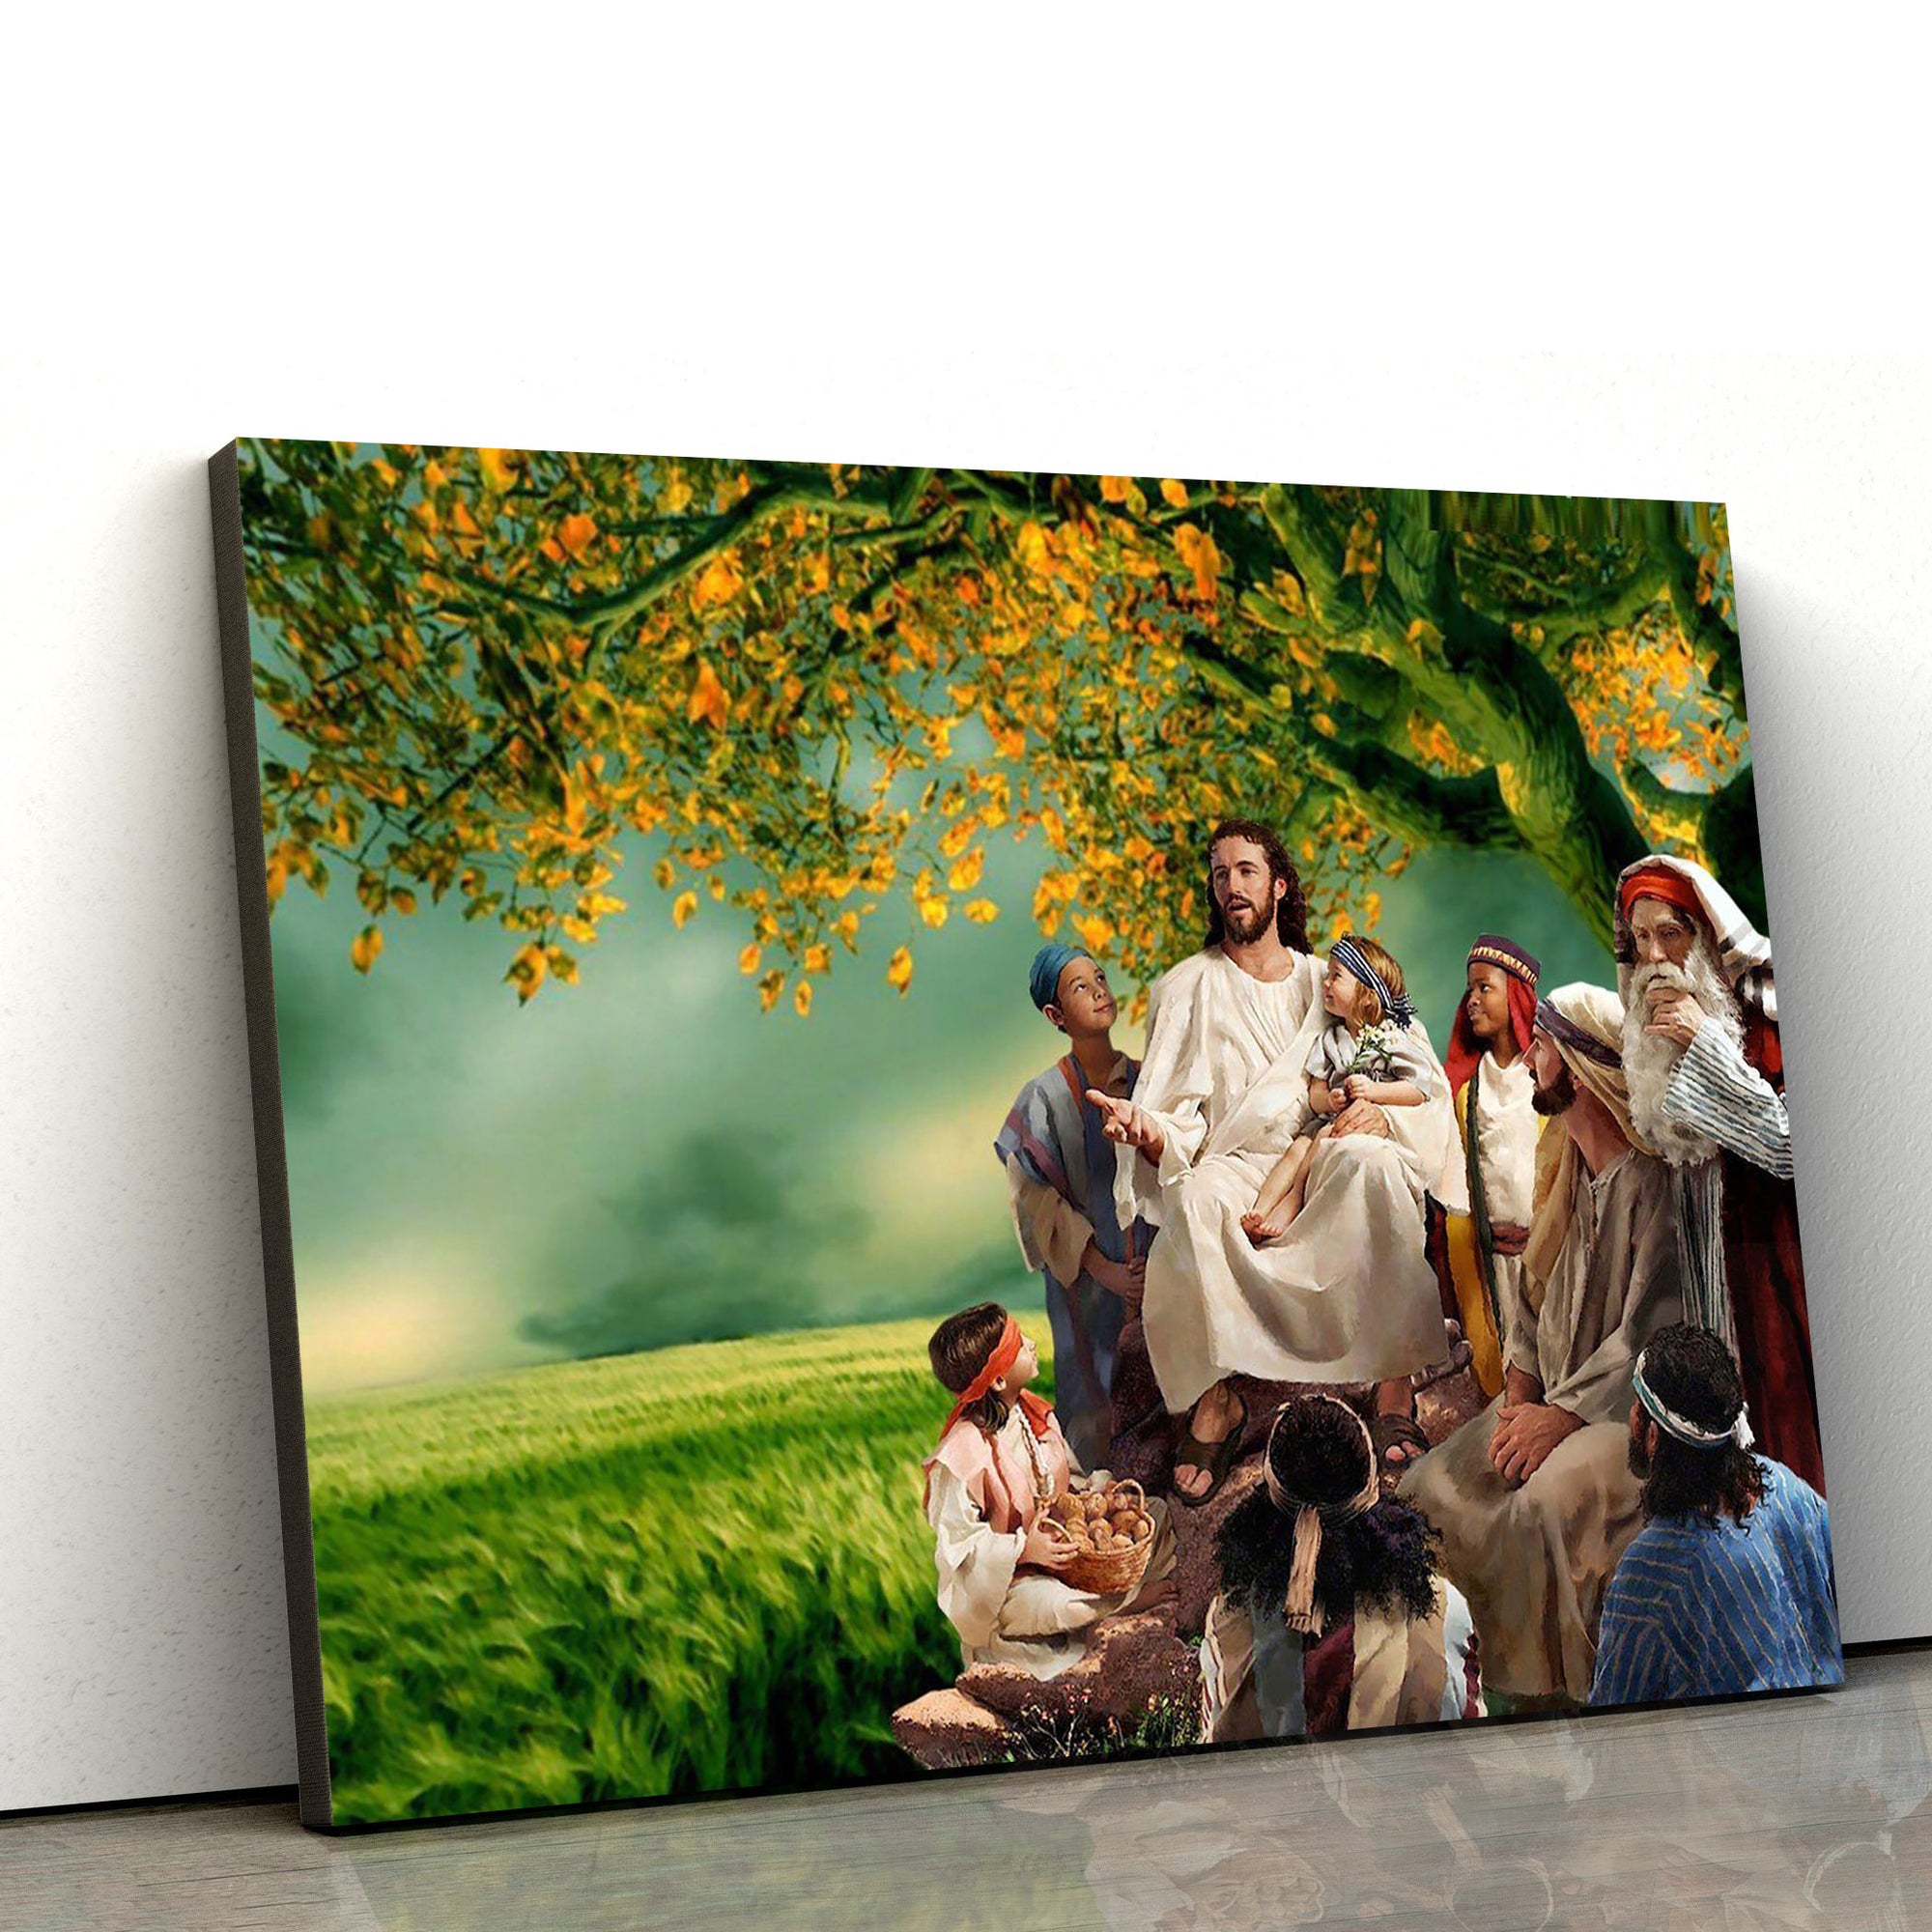 Jesus Christ And Children - Jesus Canvas Wall Art - Christian Wall Art